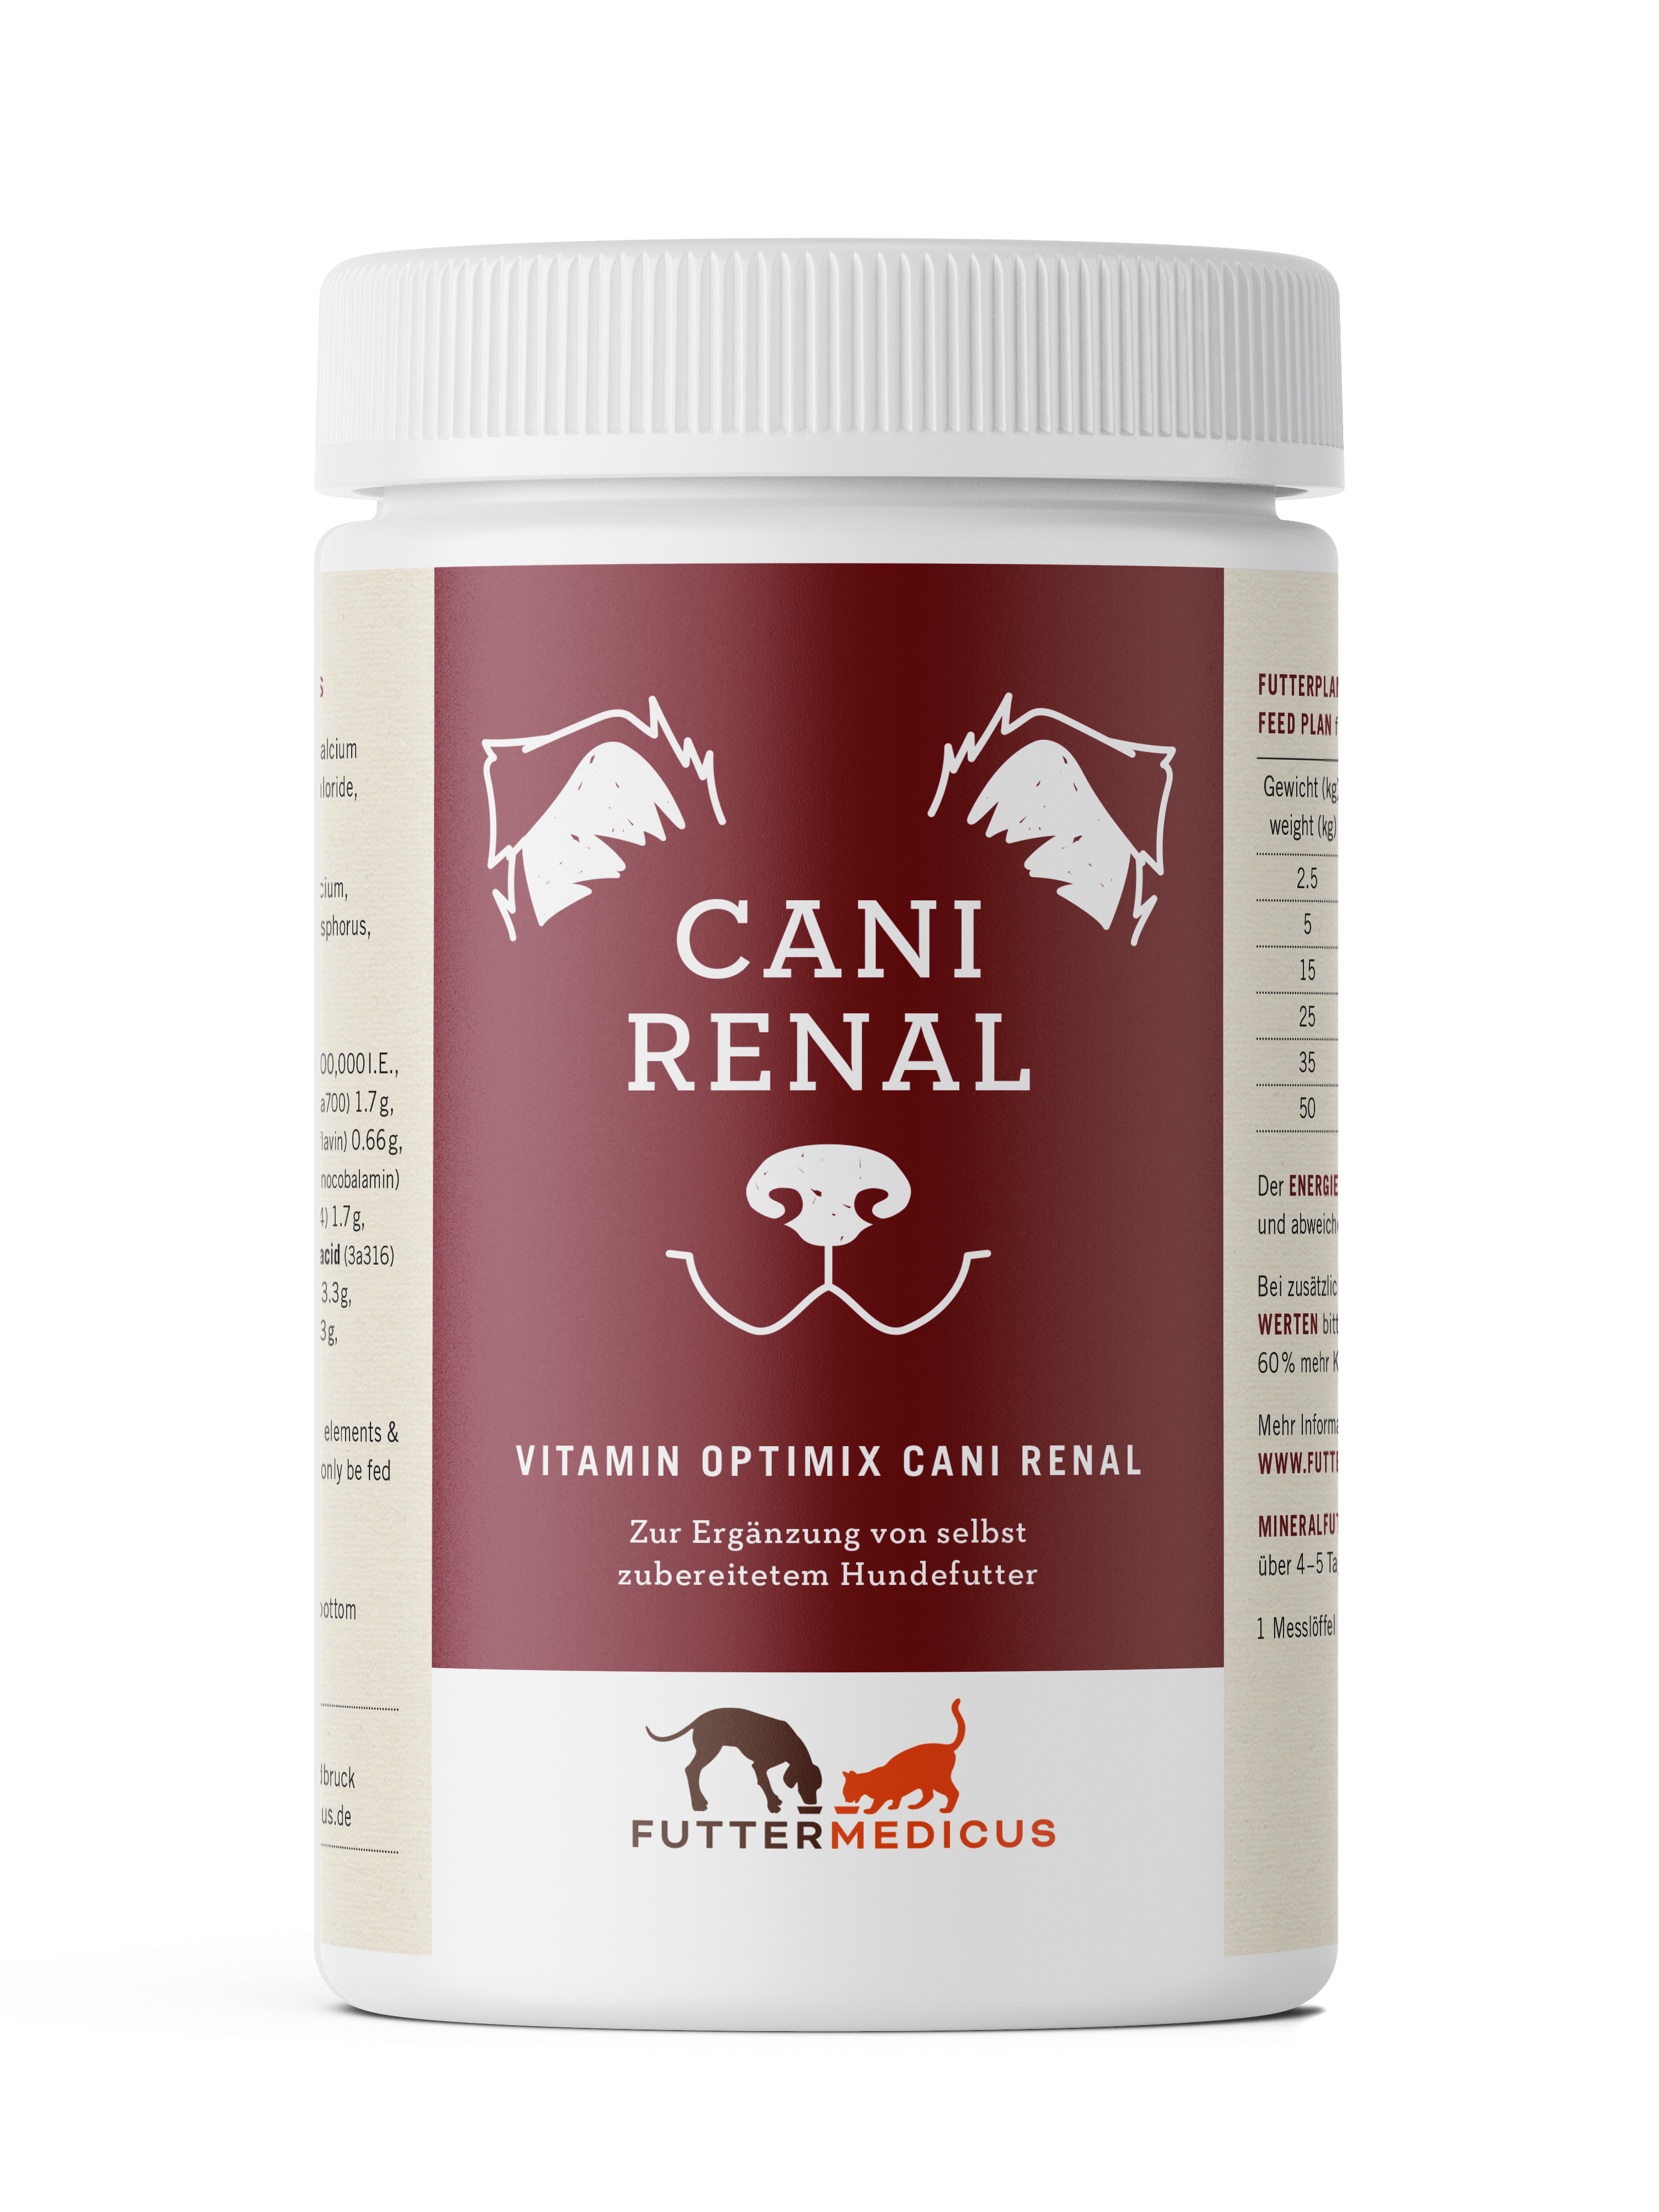 Vitamin Optimix Cani Renal 500g / Futtermedicus 